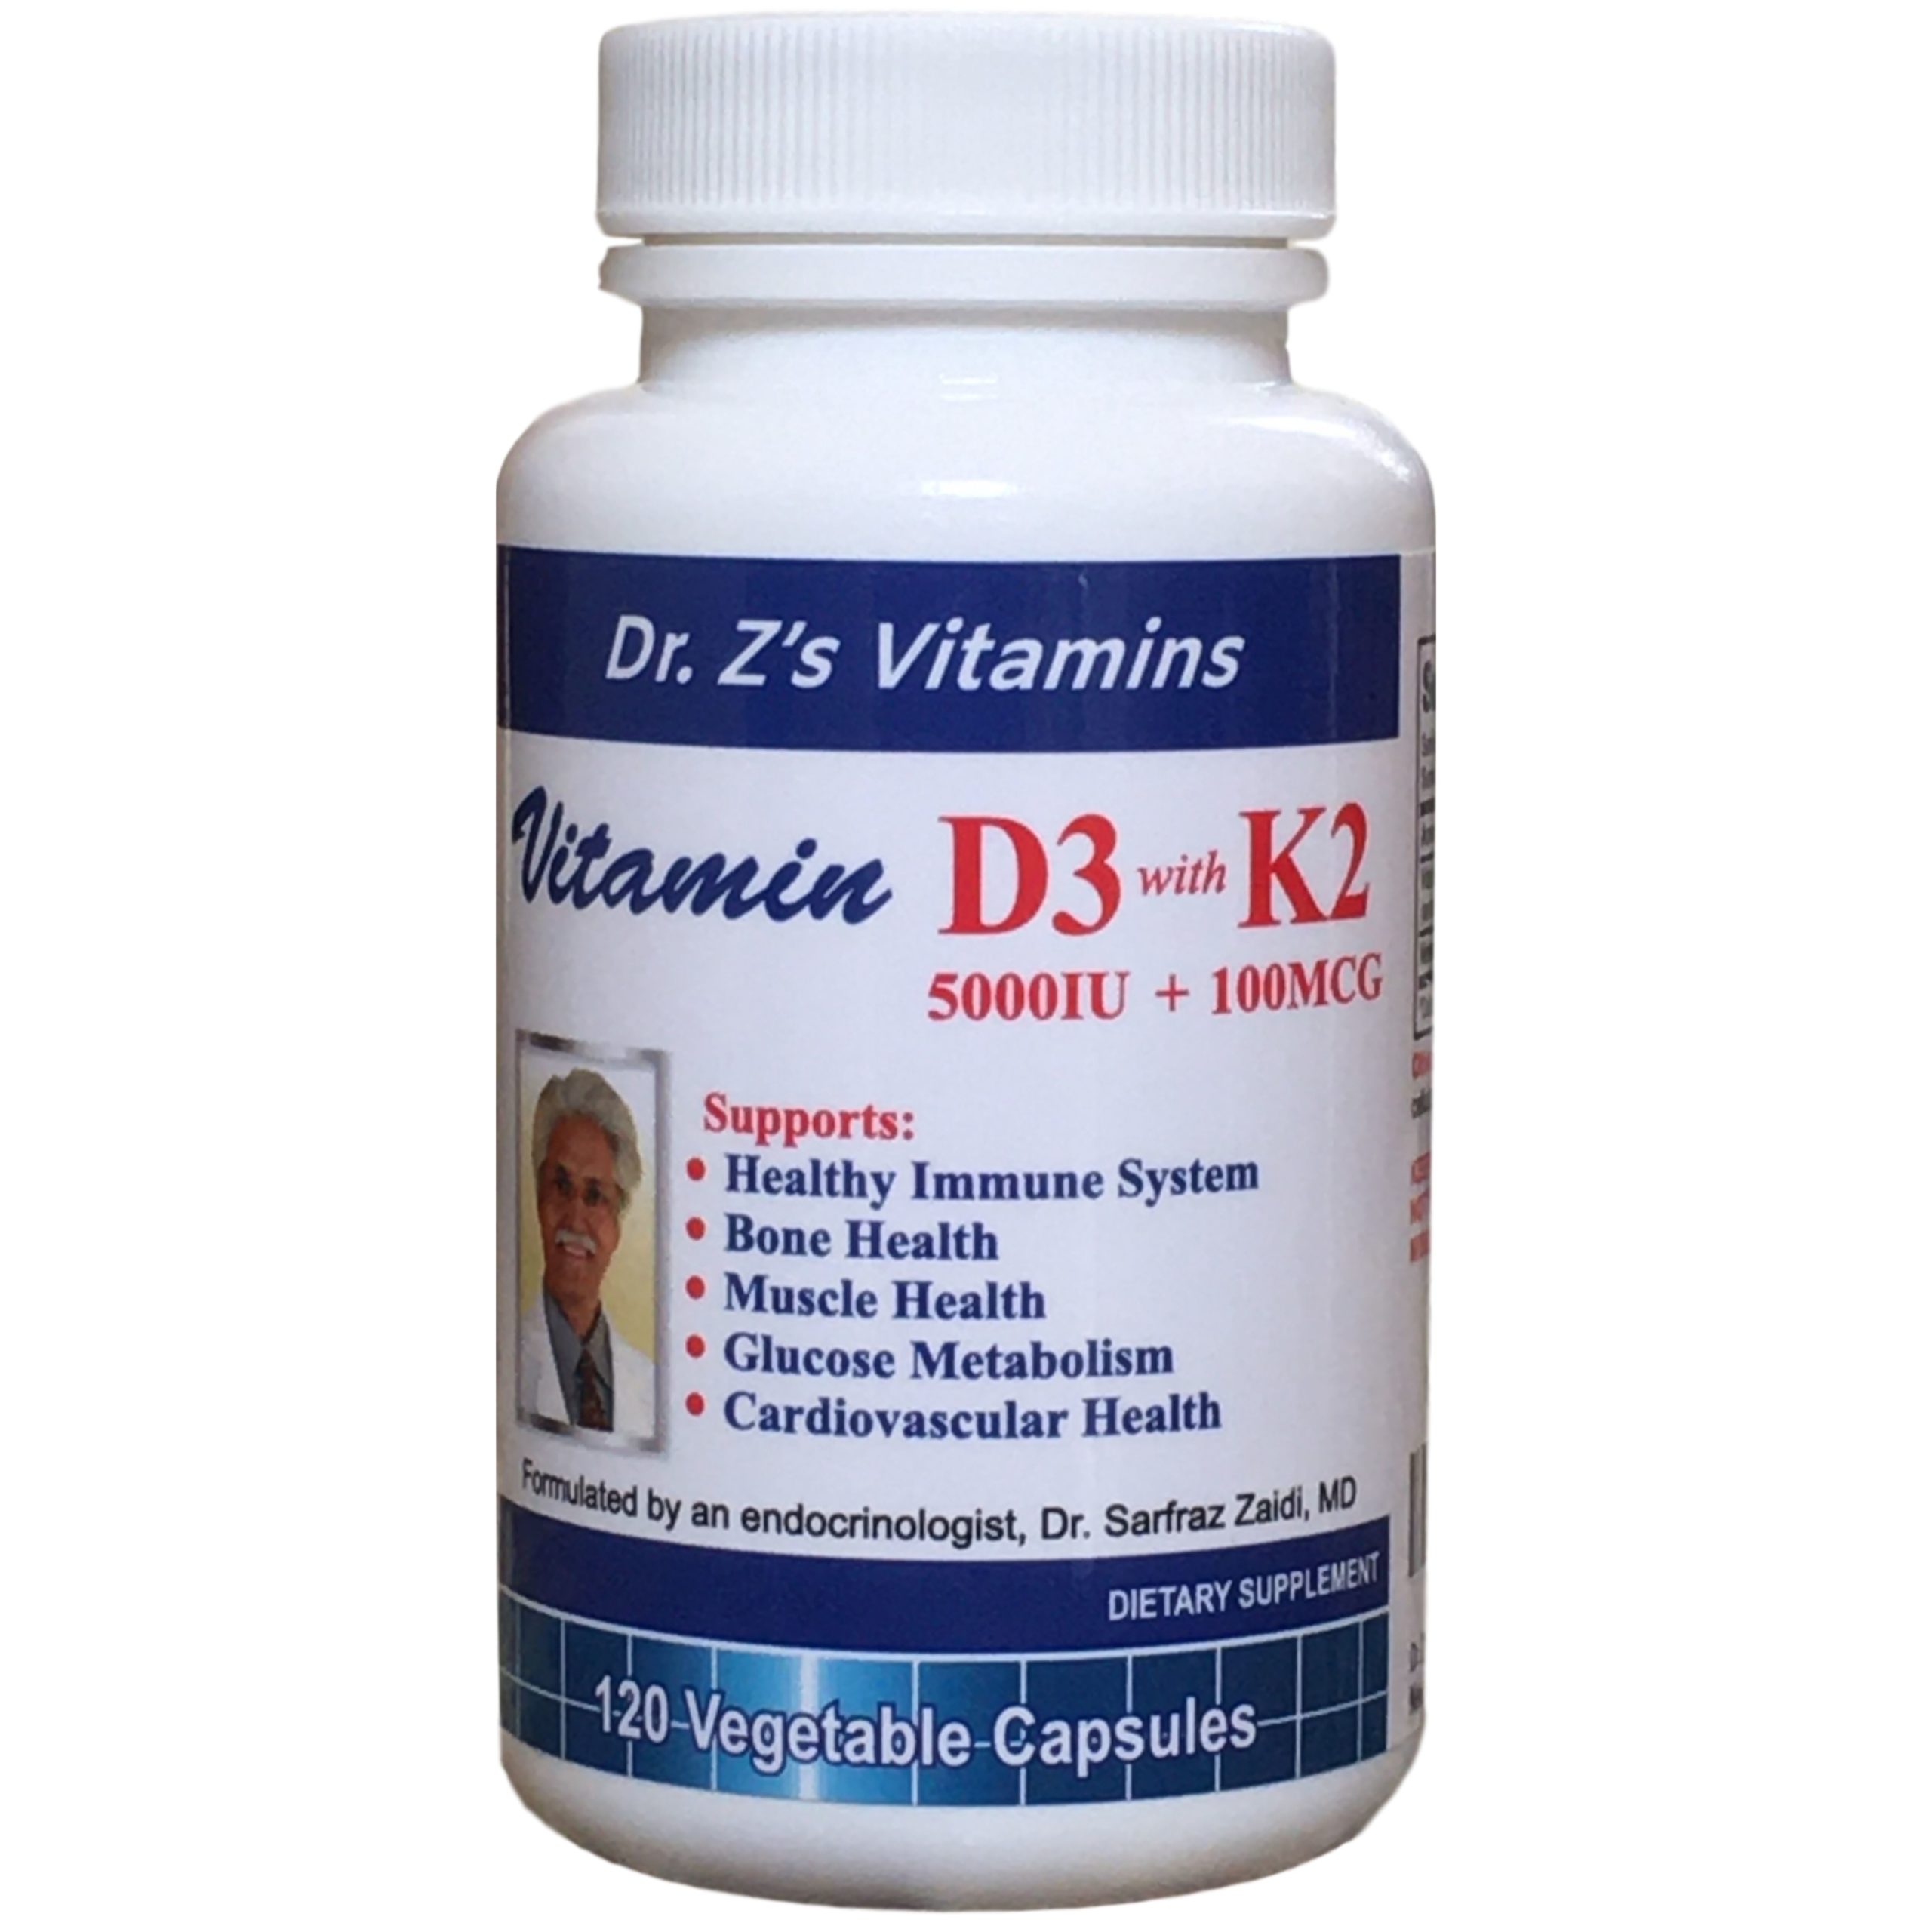 vitamin d3 with k2 - vitamins for weak bones